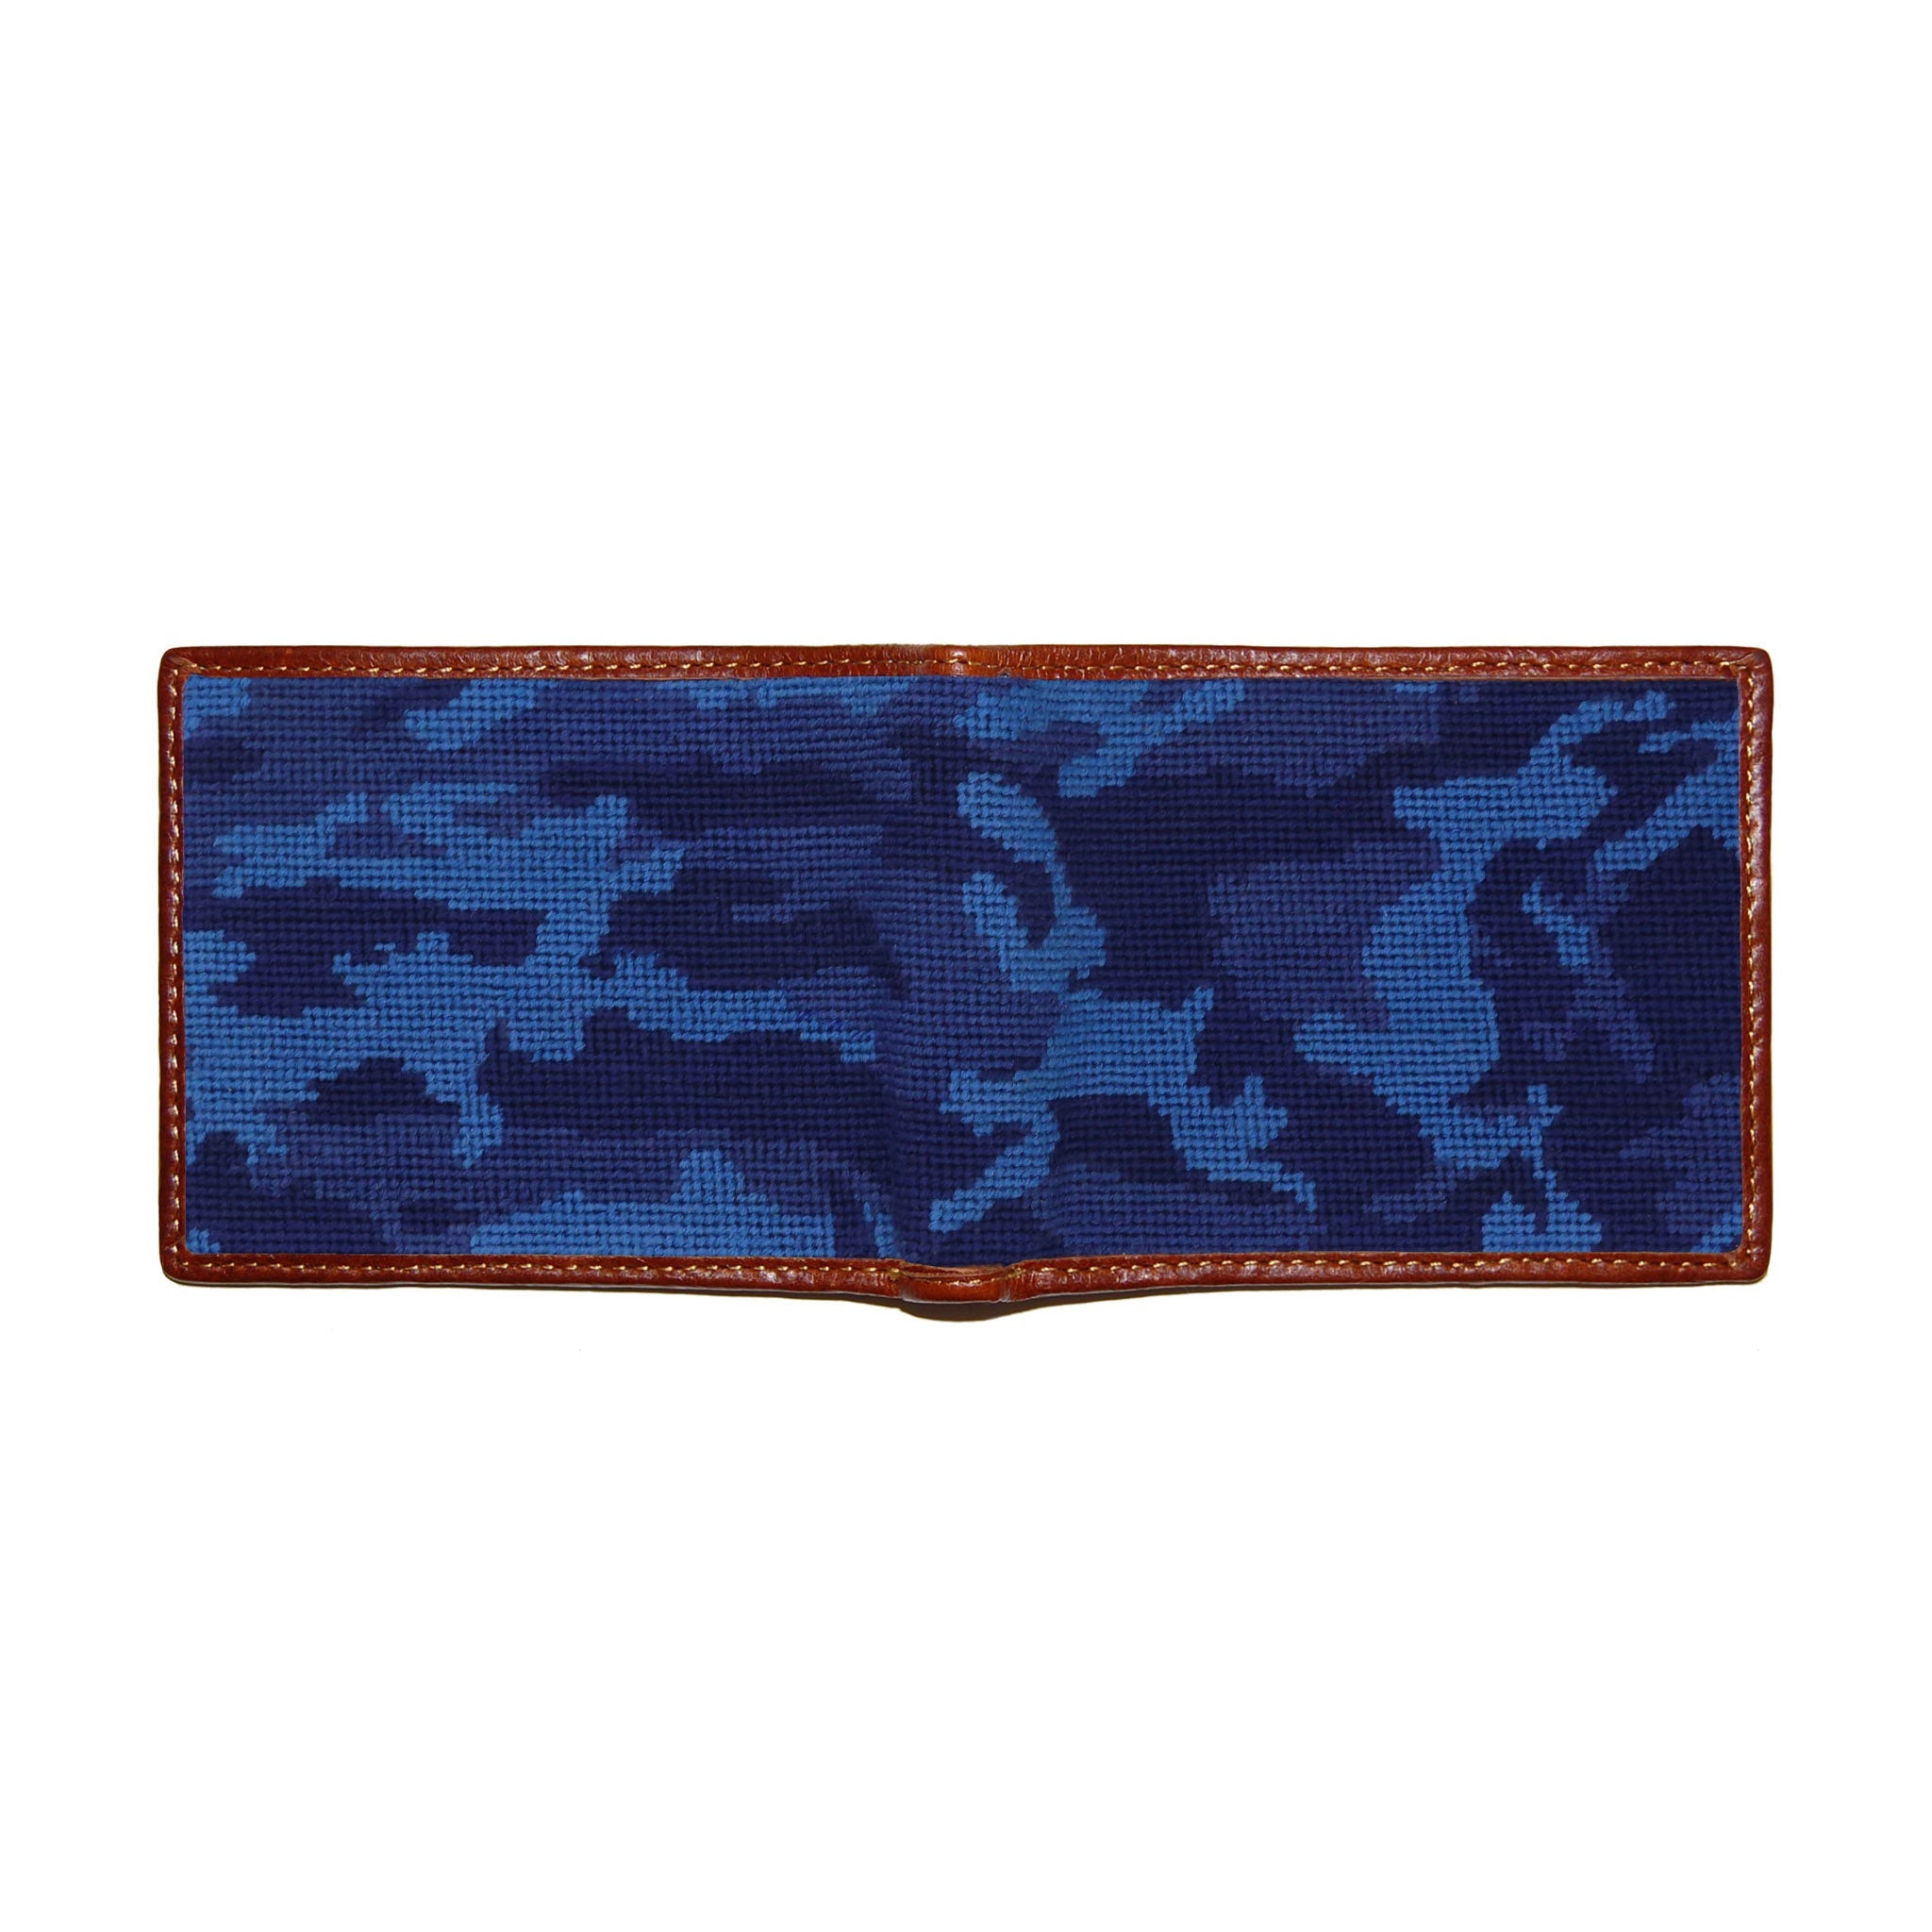 Smathers and Branson Navy Camo Needlepoint Bi-Fold Wallet  